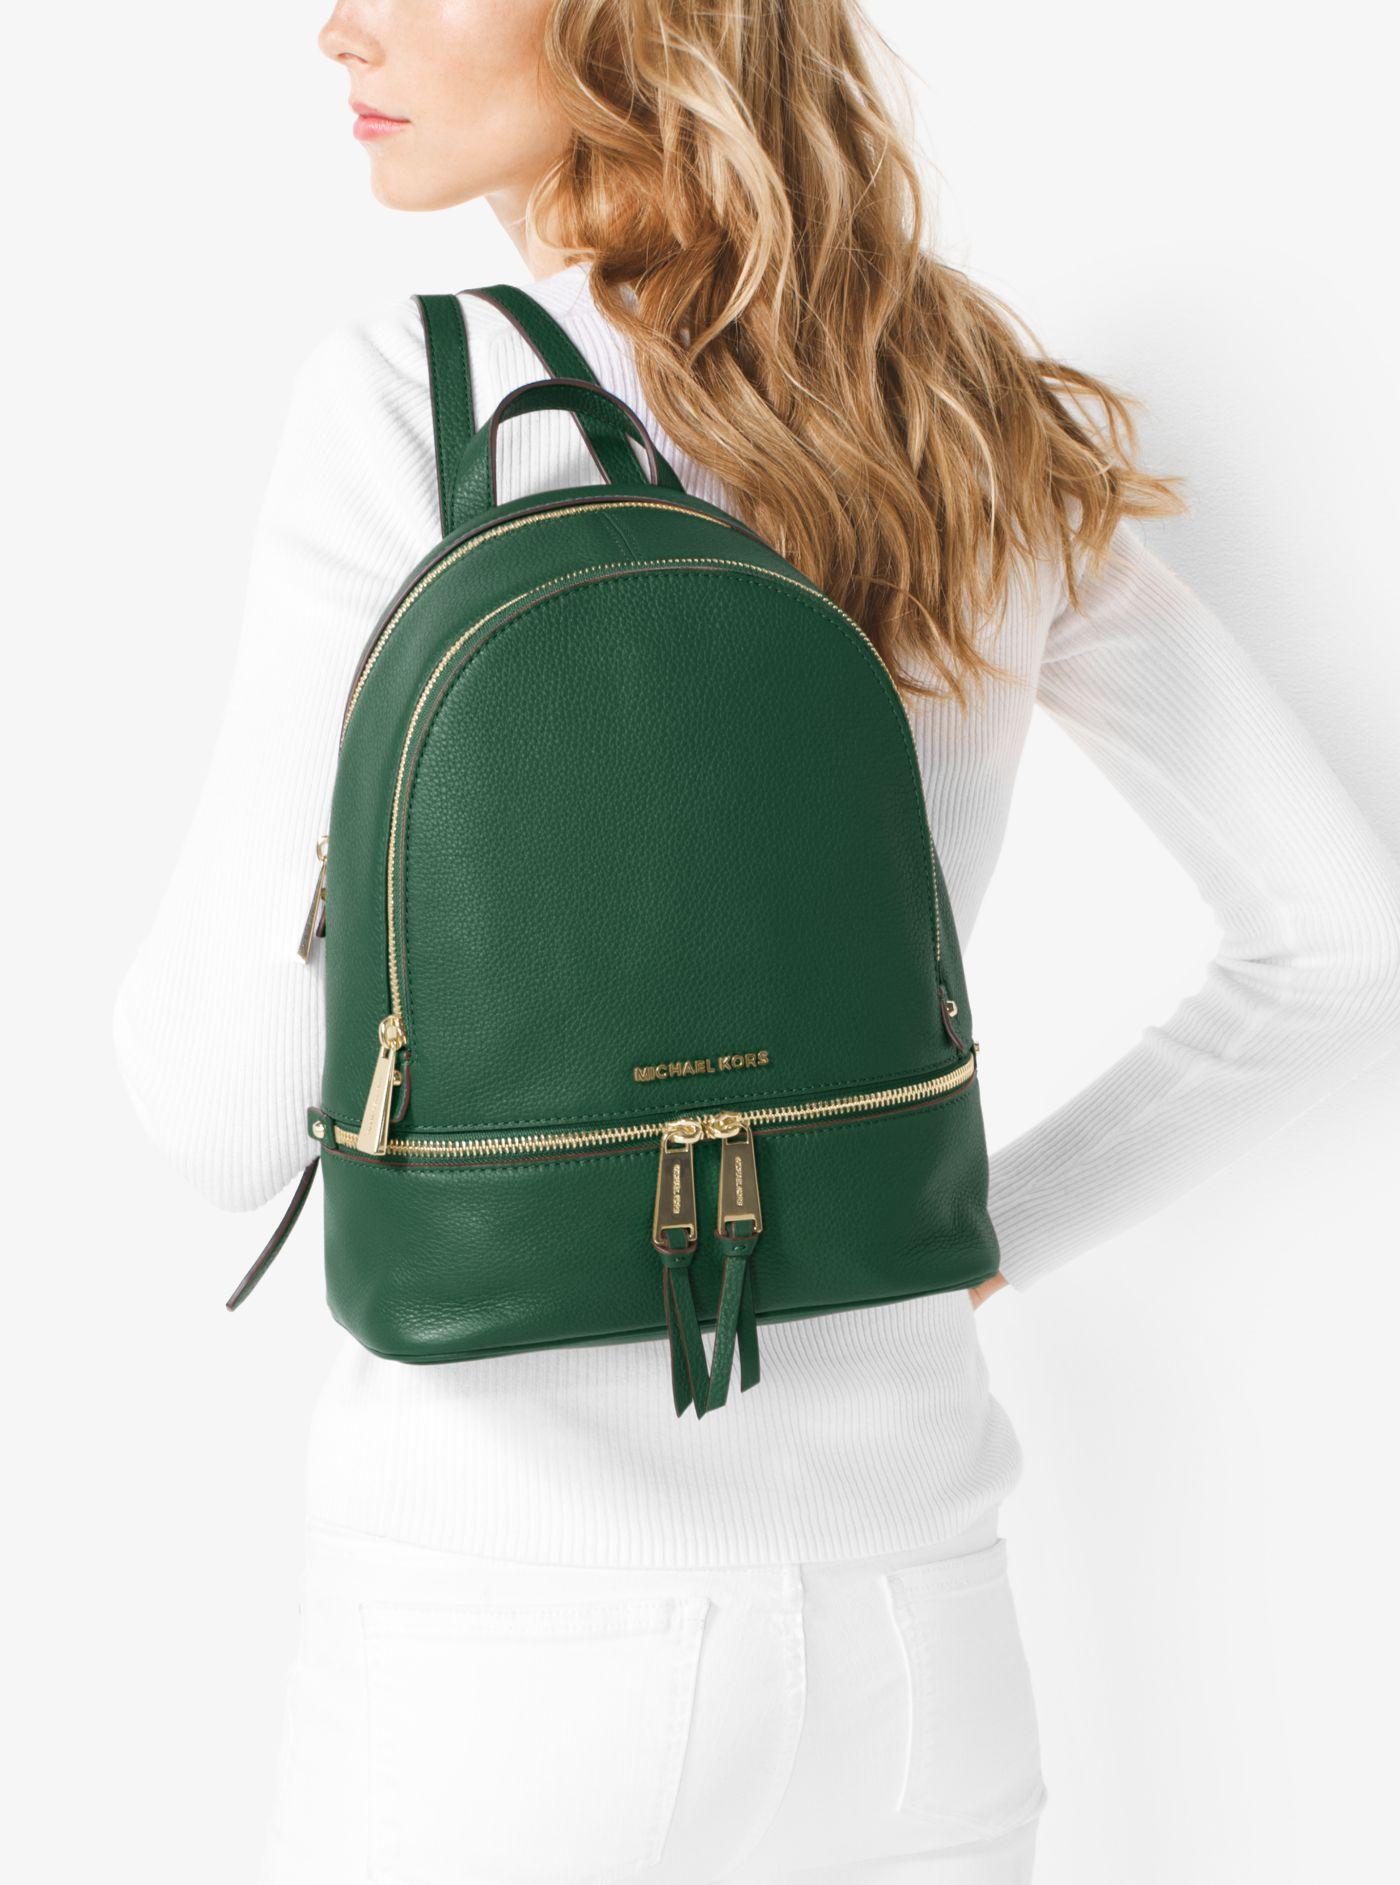 michael kors green backpack